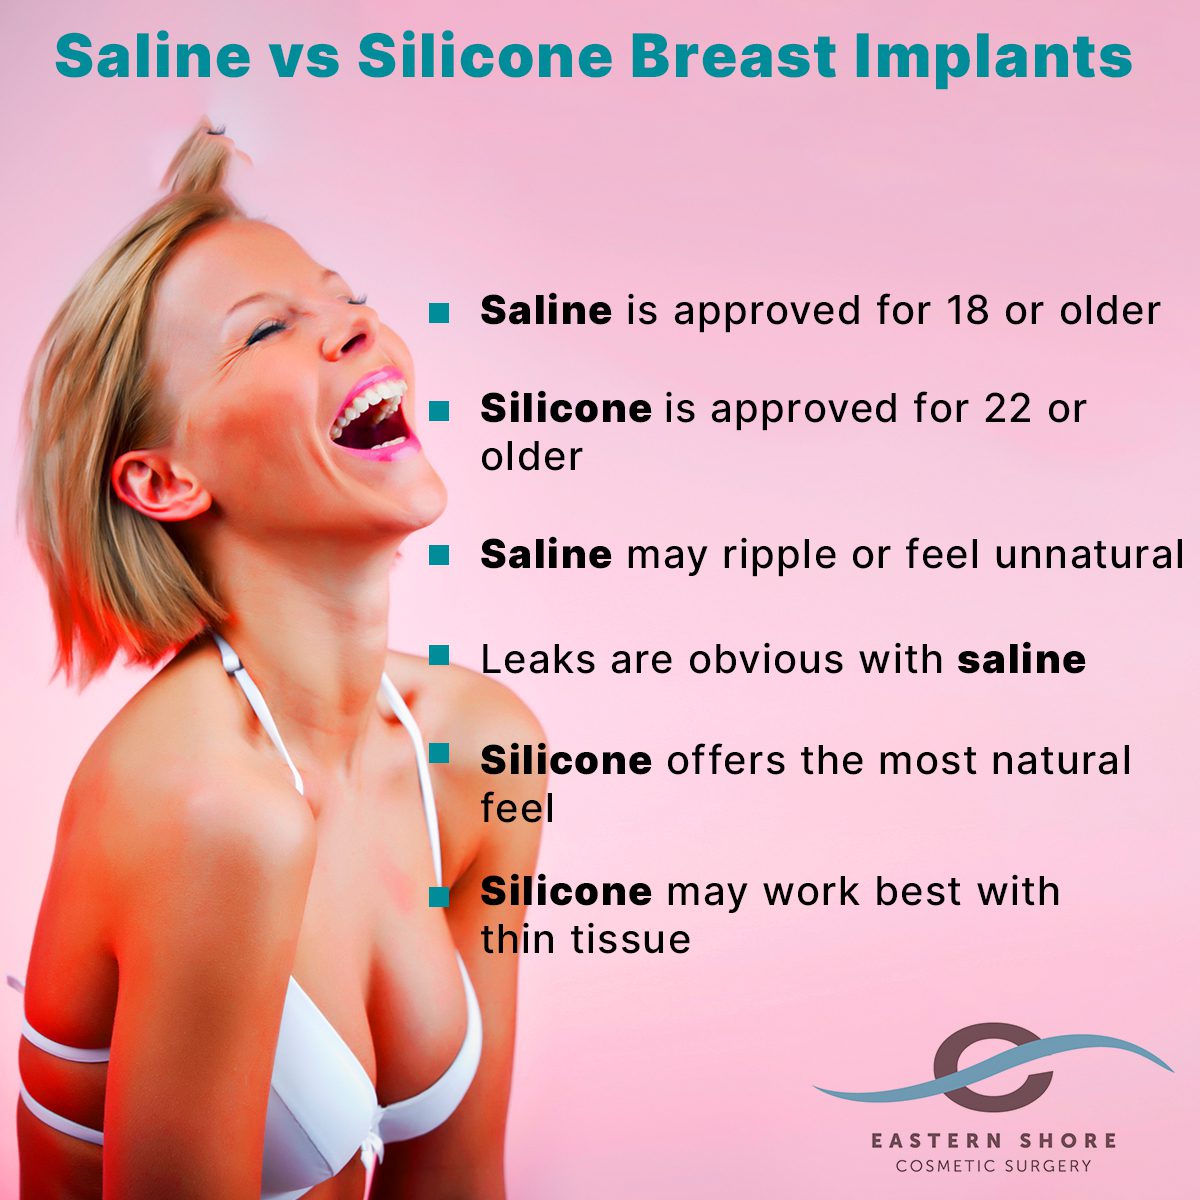 silicone vs saline implant - infographic